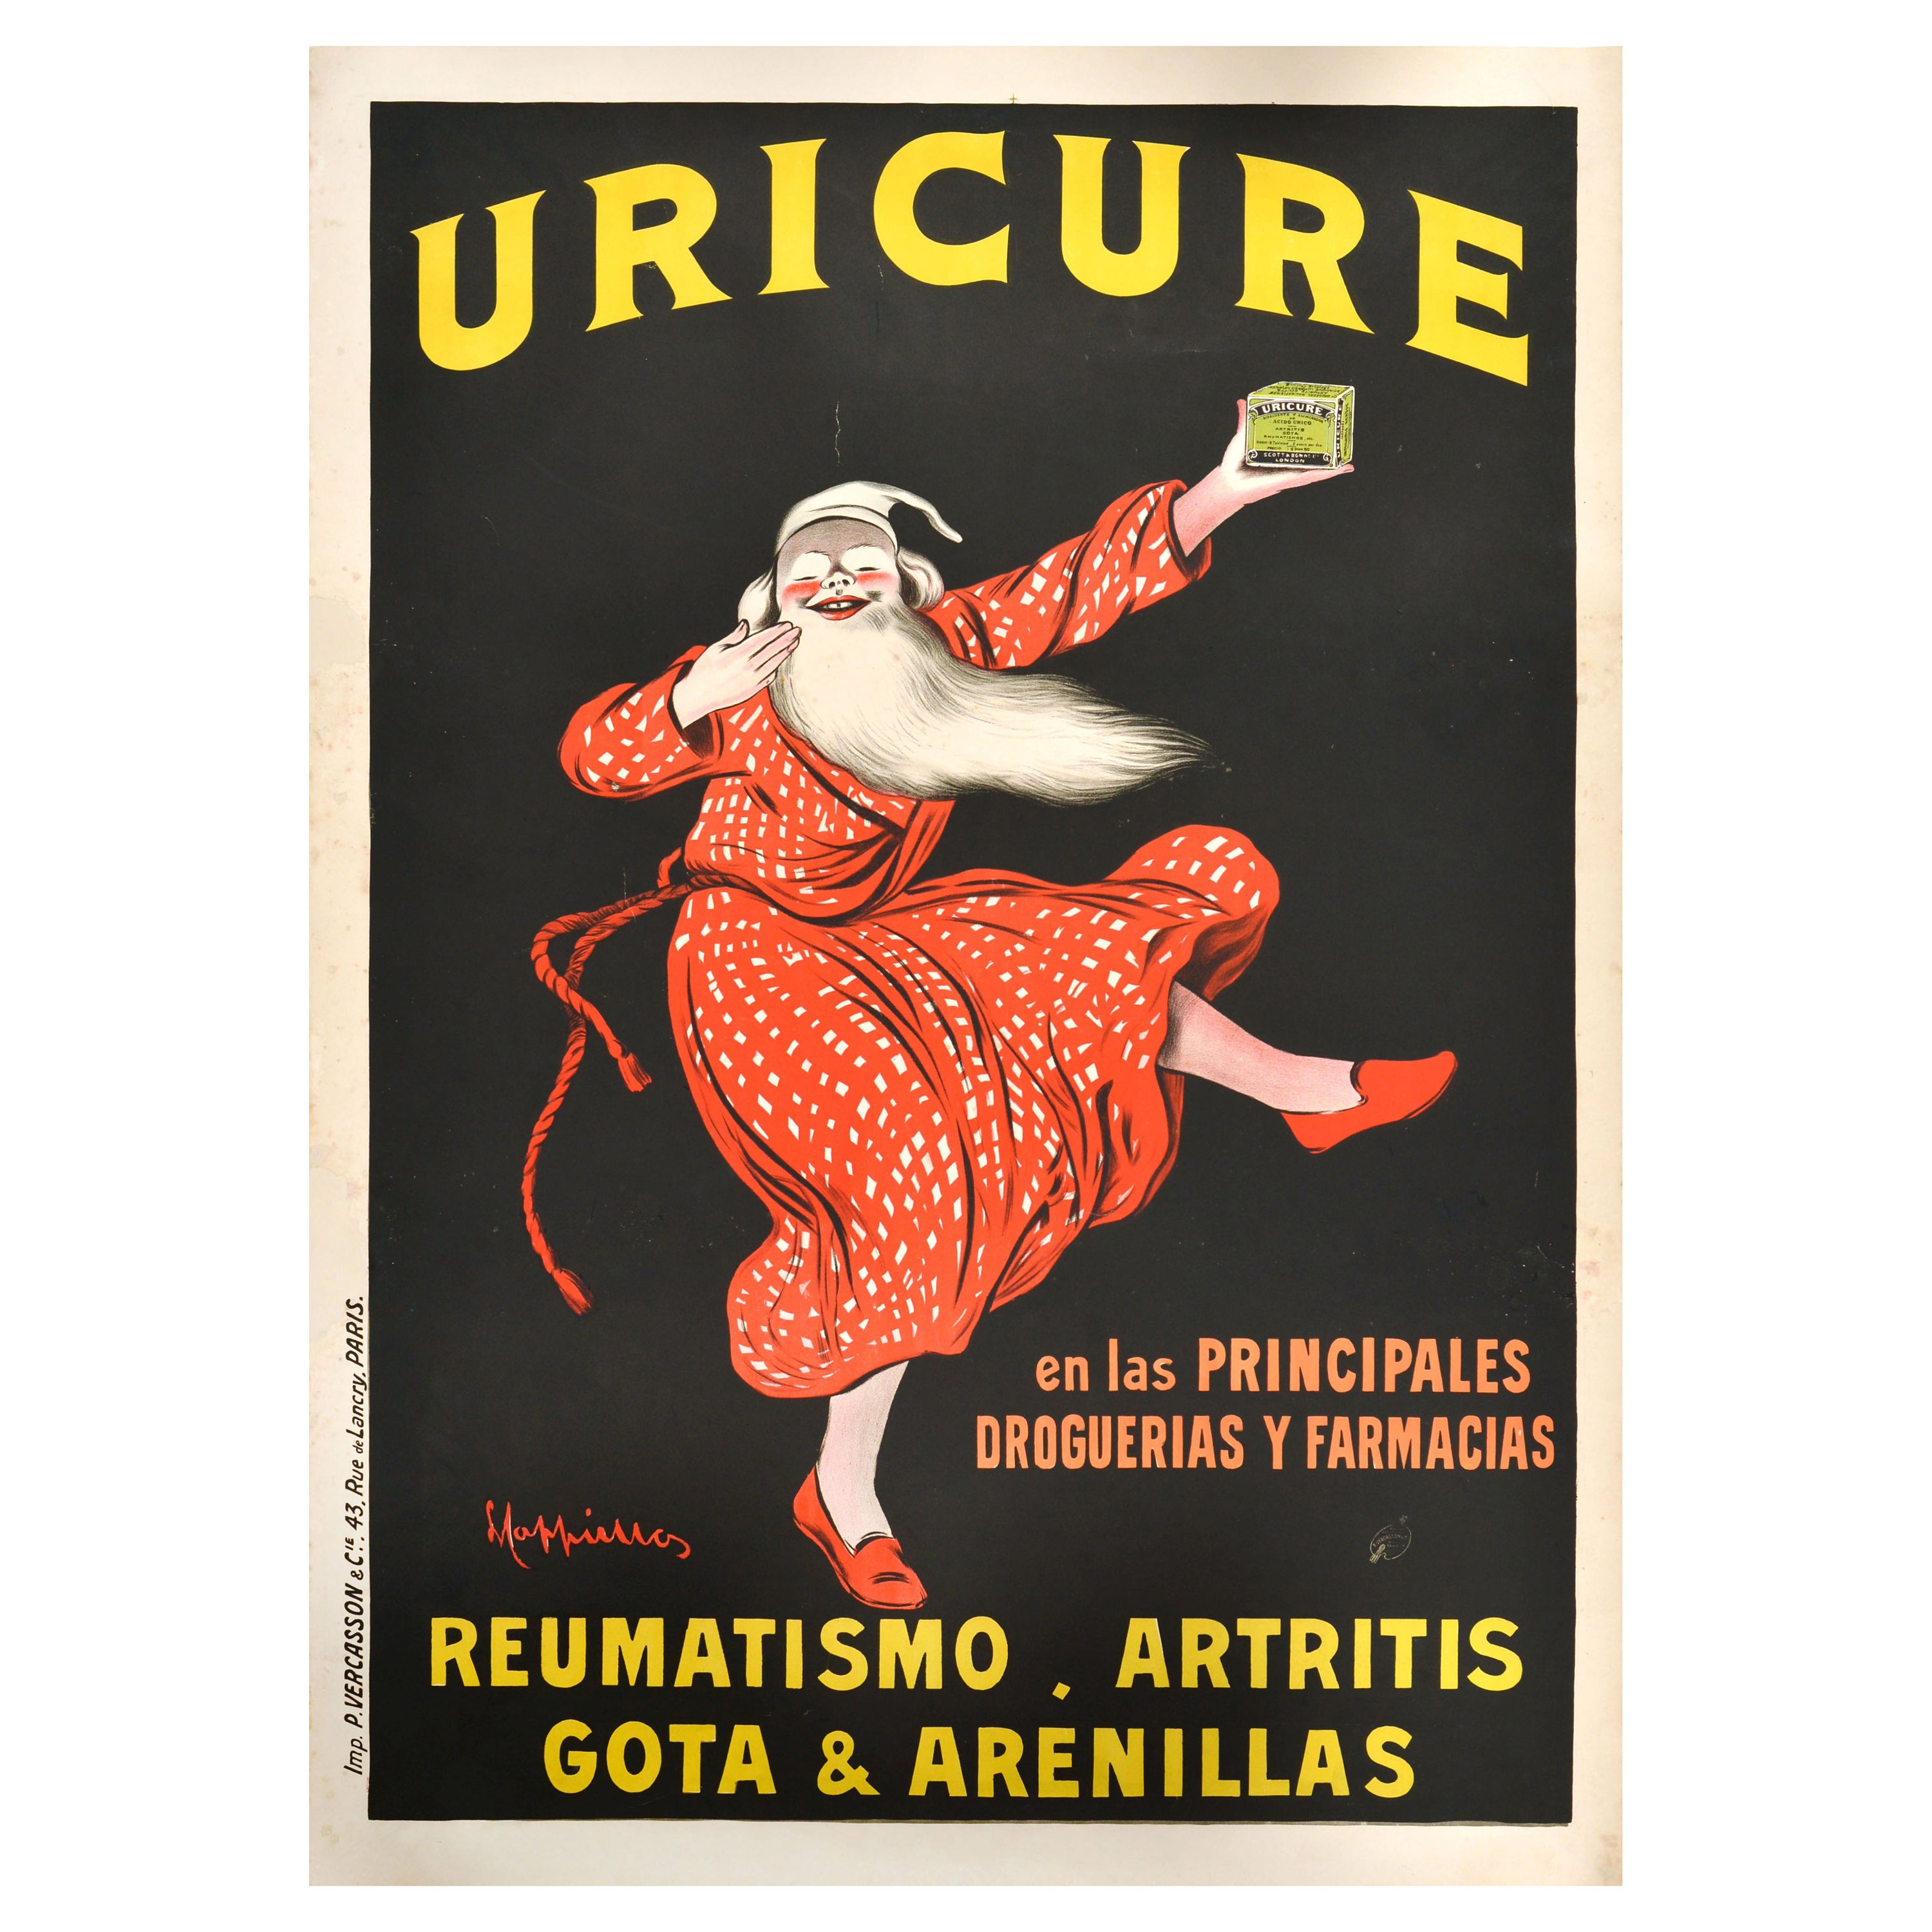 Original Antikes Werbeplakat Uricure Medicine, Leonetto Cappiello, Design im Angebot